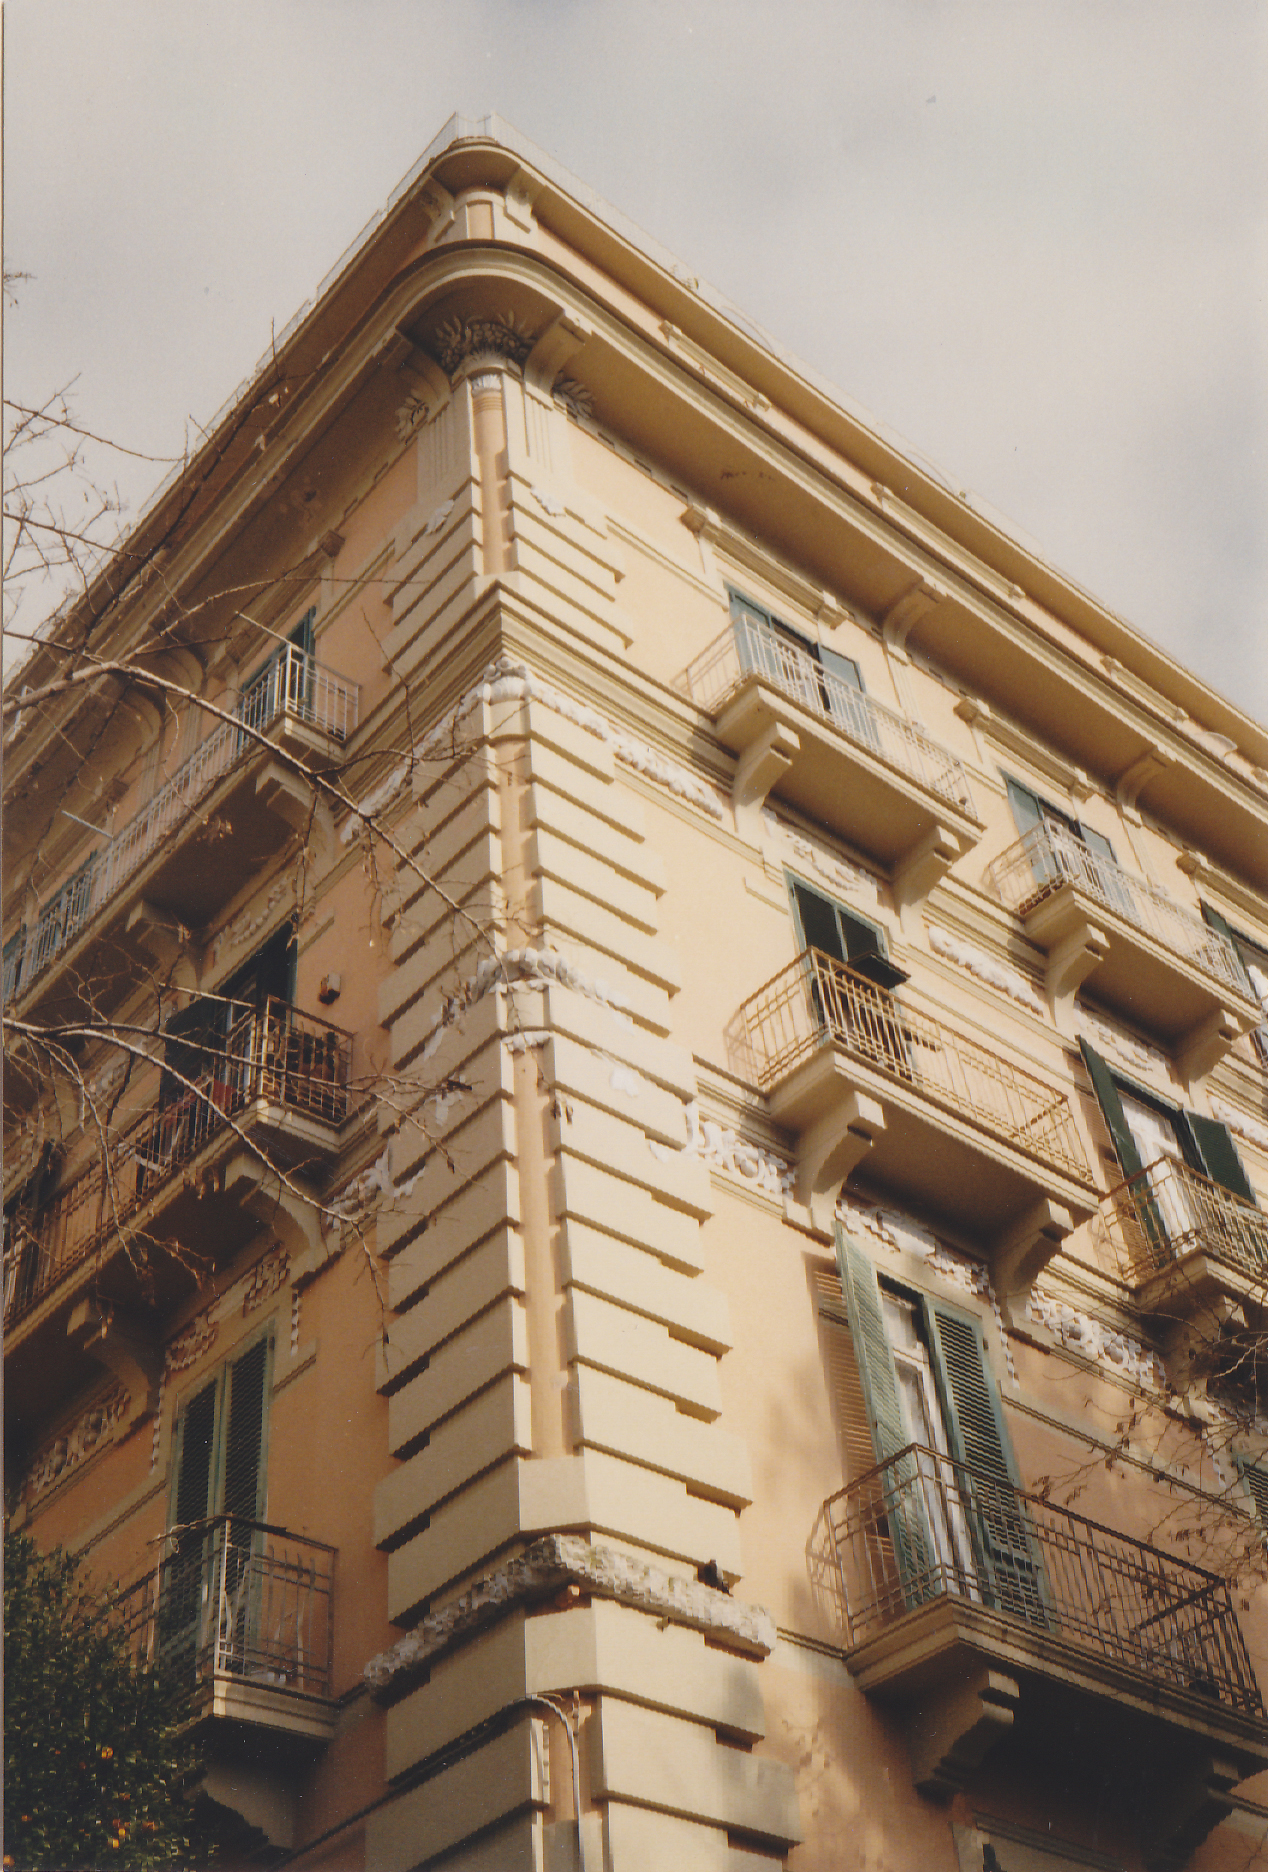 ignota - via Maestro Colantoni, 2 (palazzo, residenziale) - Napoli (NA)  (XX)